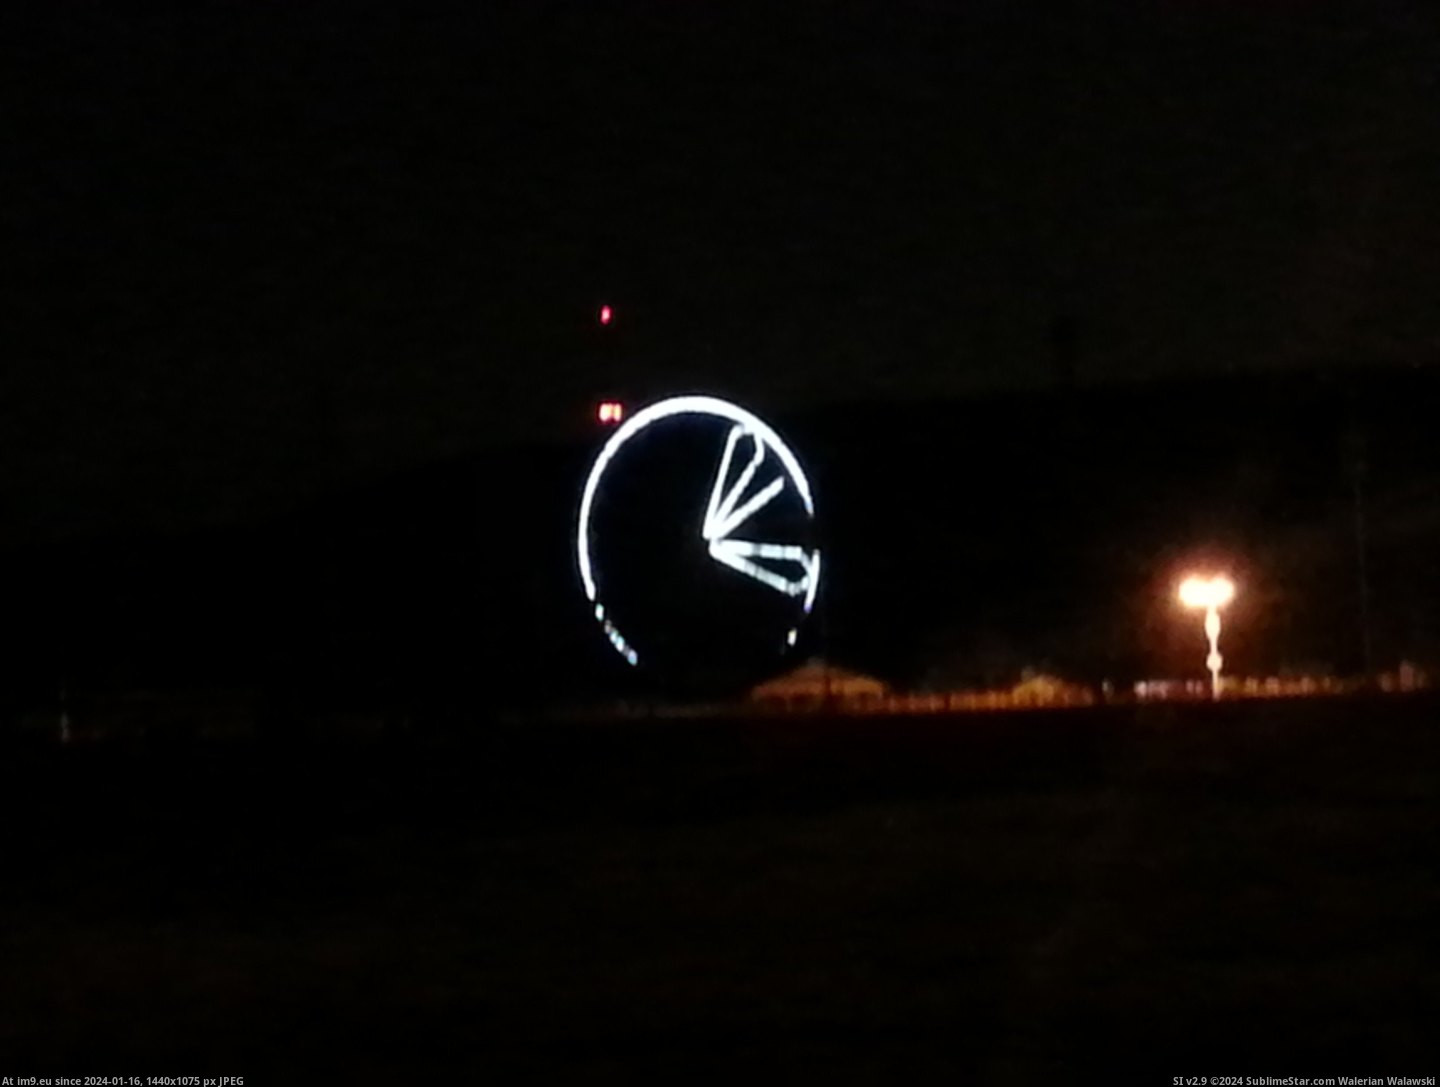 #Big #Night #Off #Clock #Wheel #Flags #Ferris #Season #Turns #Six [Mildlyinteresting] The ferris wheel at Six Flags turns into a big clock at night in the off season. Pic. (Obraz z album My r/MILDLYINTERESTING favs))